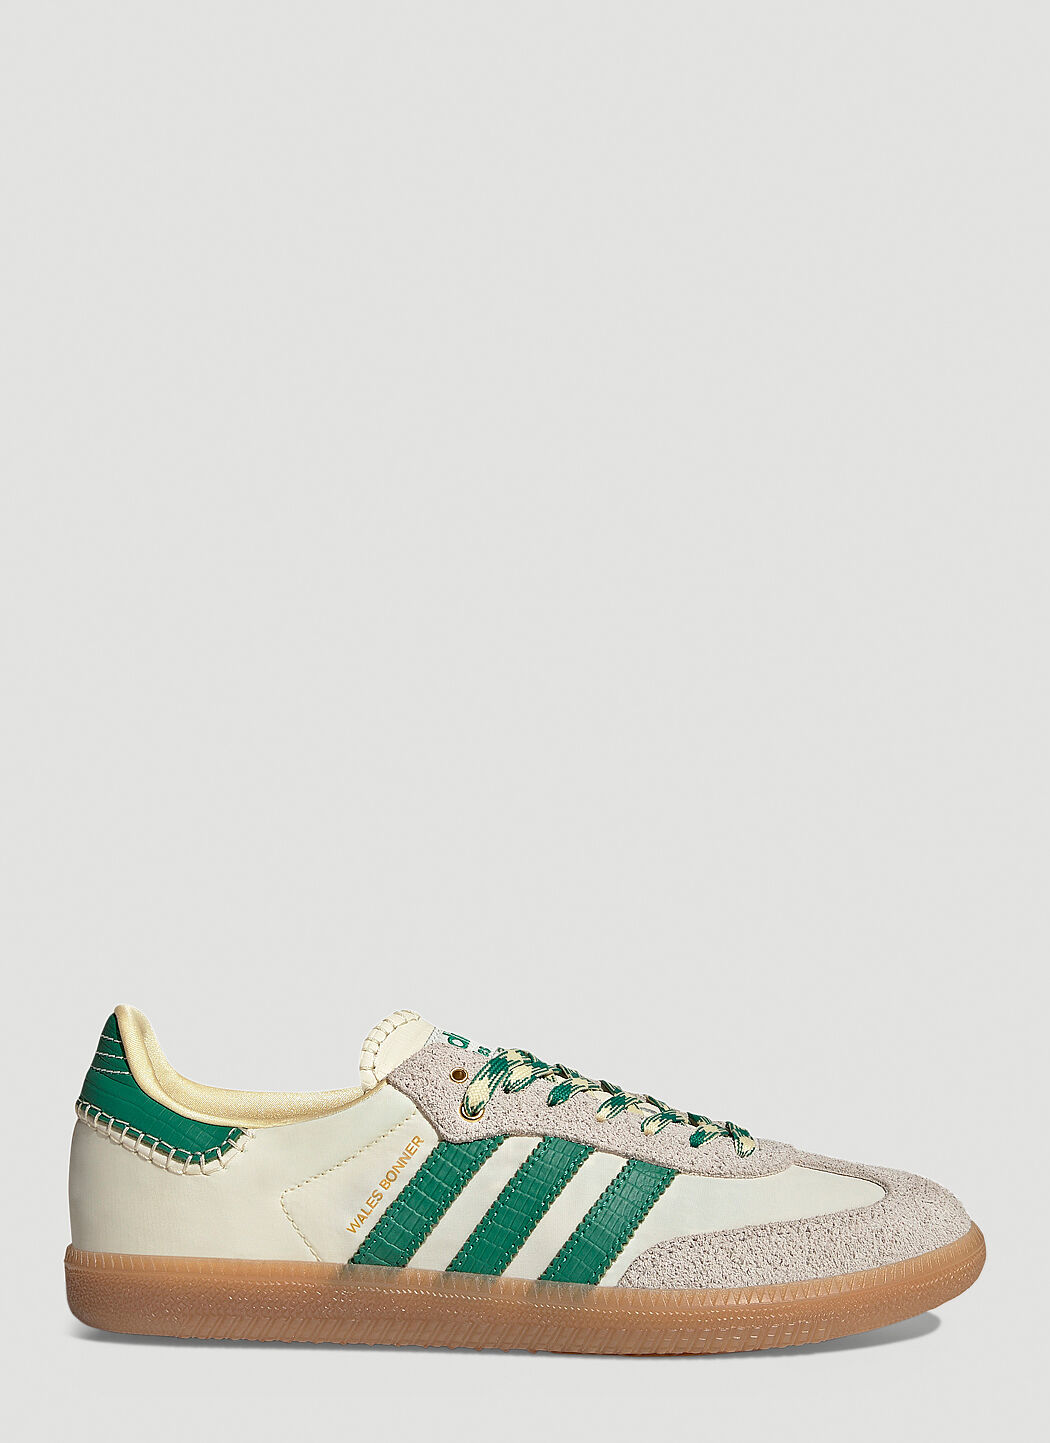 adidas by Wales Bonner Samba Sneakers グリーン awb0354010